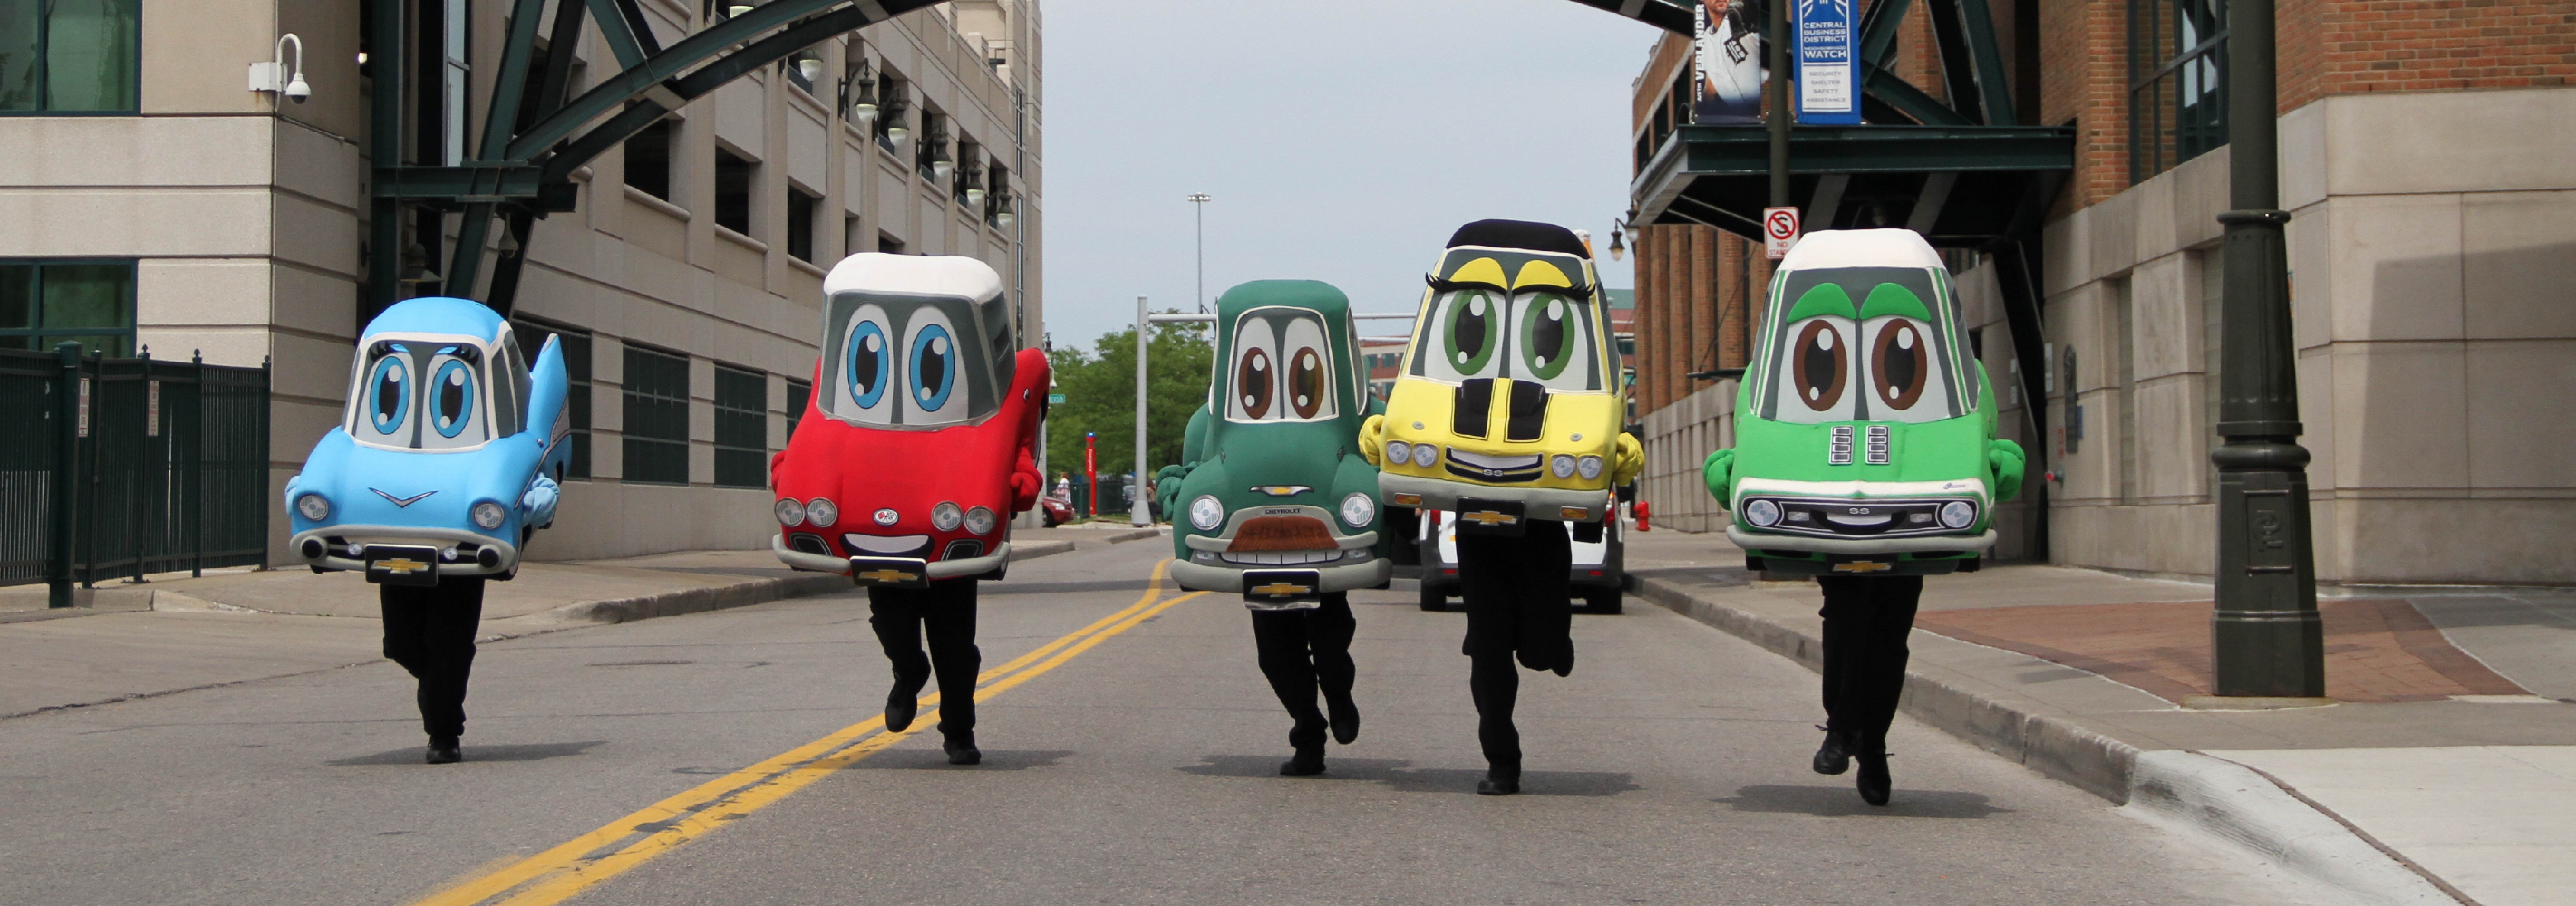 metro detroit chevy dealers mascots running through a street